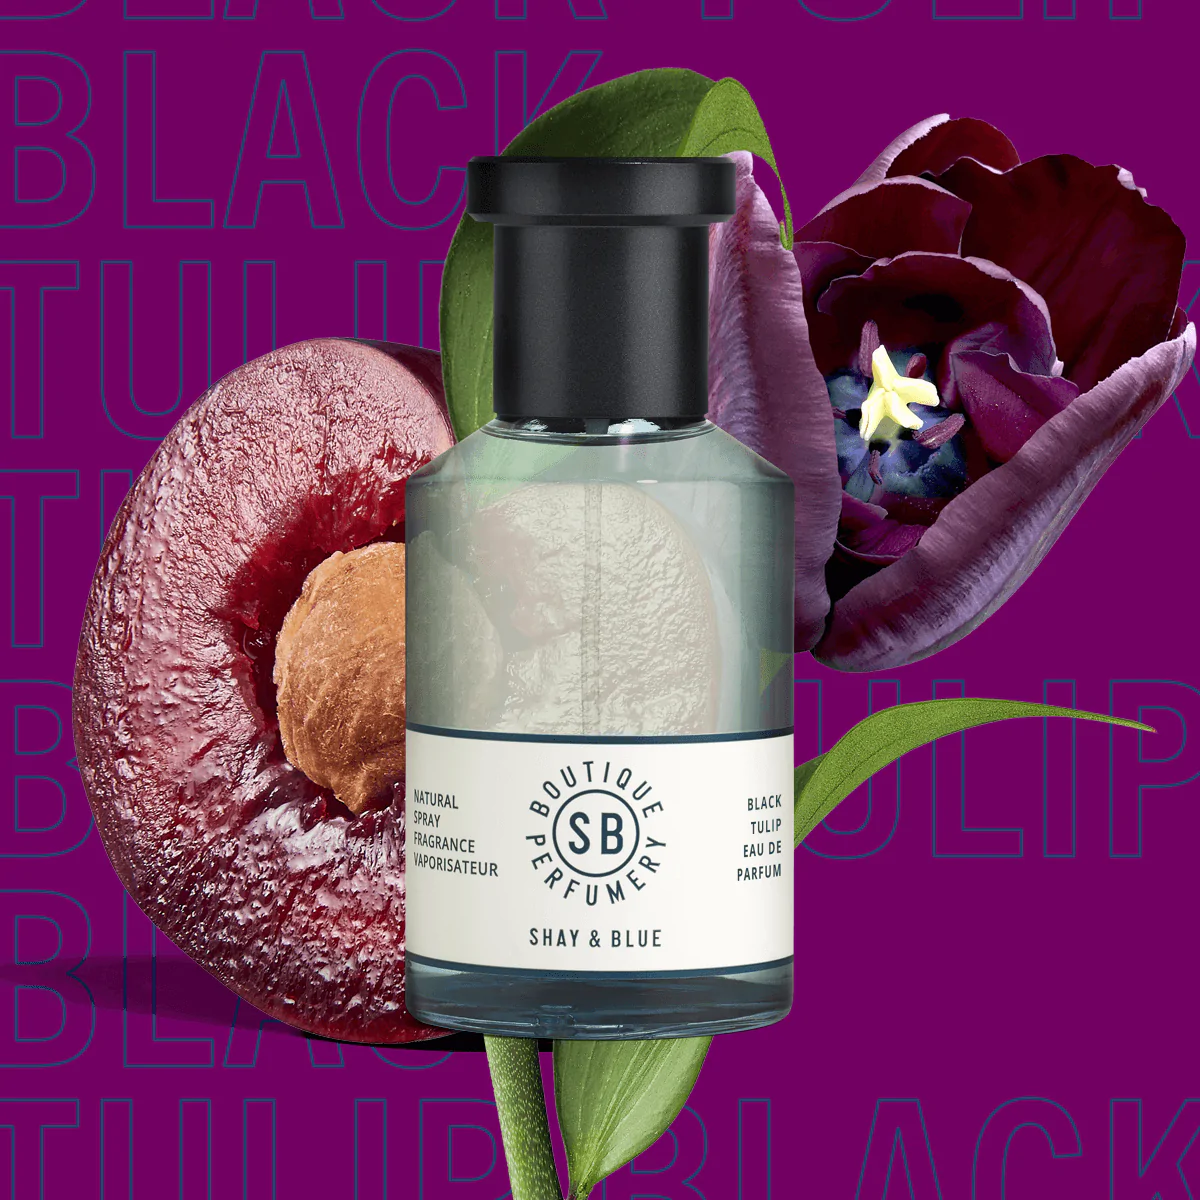 Shay & Blue Black Tulip
Best Plum Perfumes